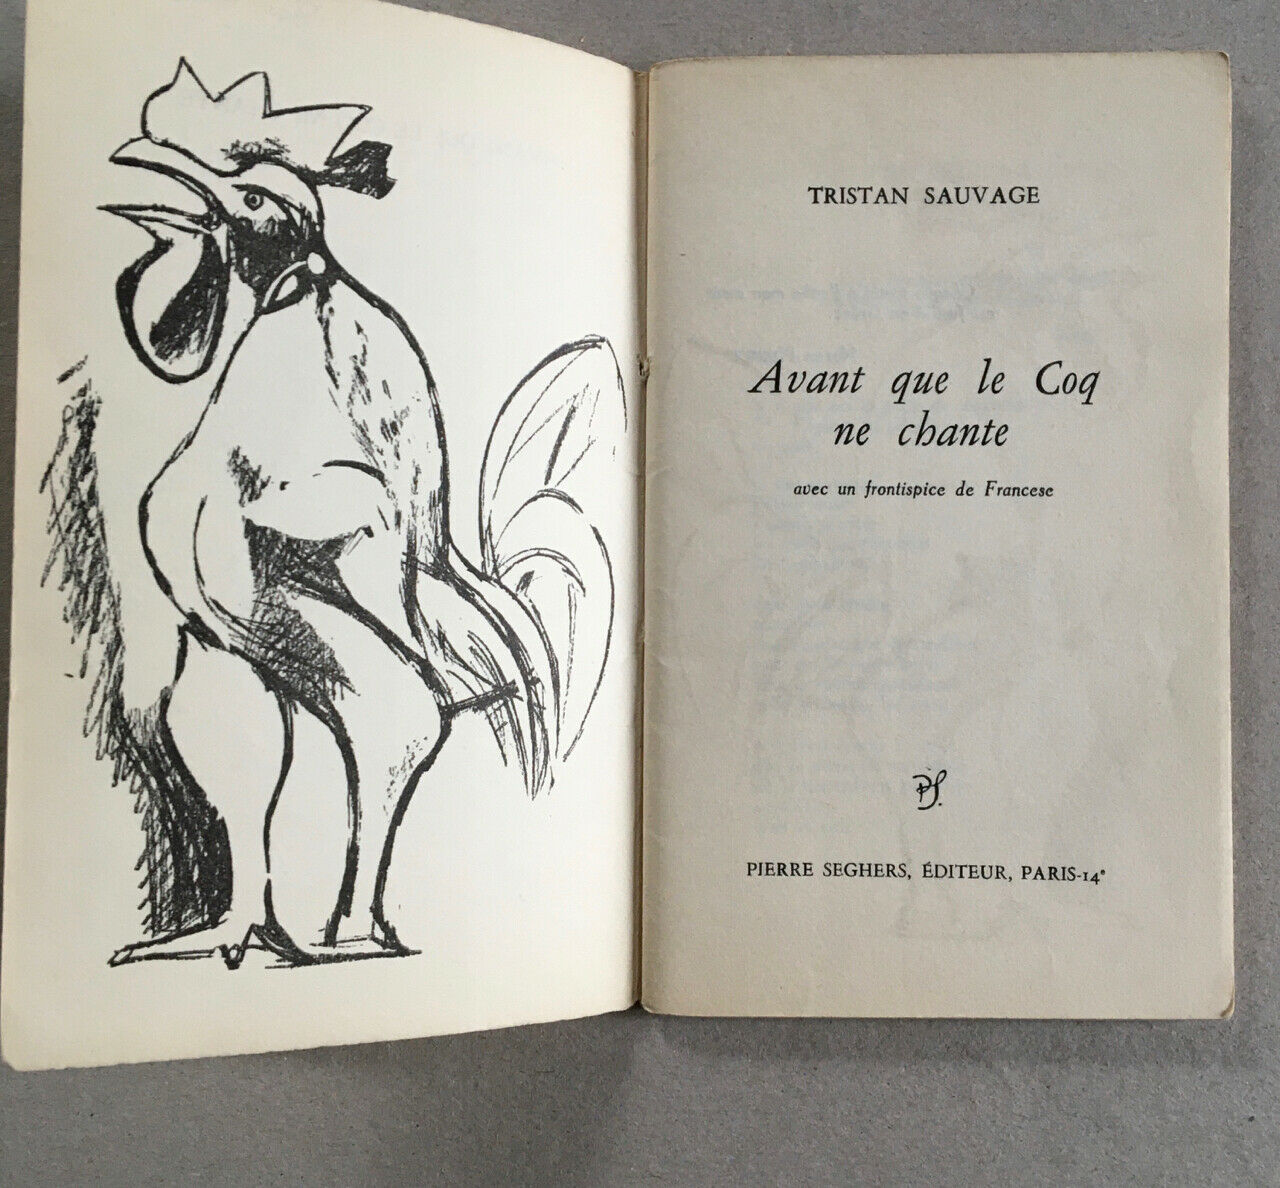 [Arturo Schwartz] Tristan Sauvage — Before the Cock Crows — n°/100 — 1951.